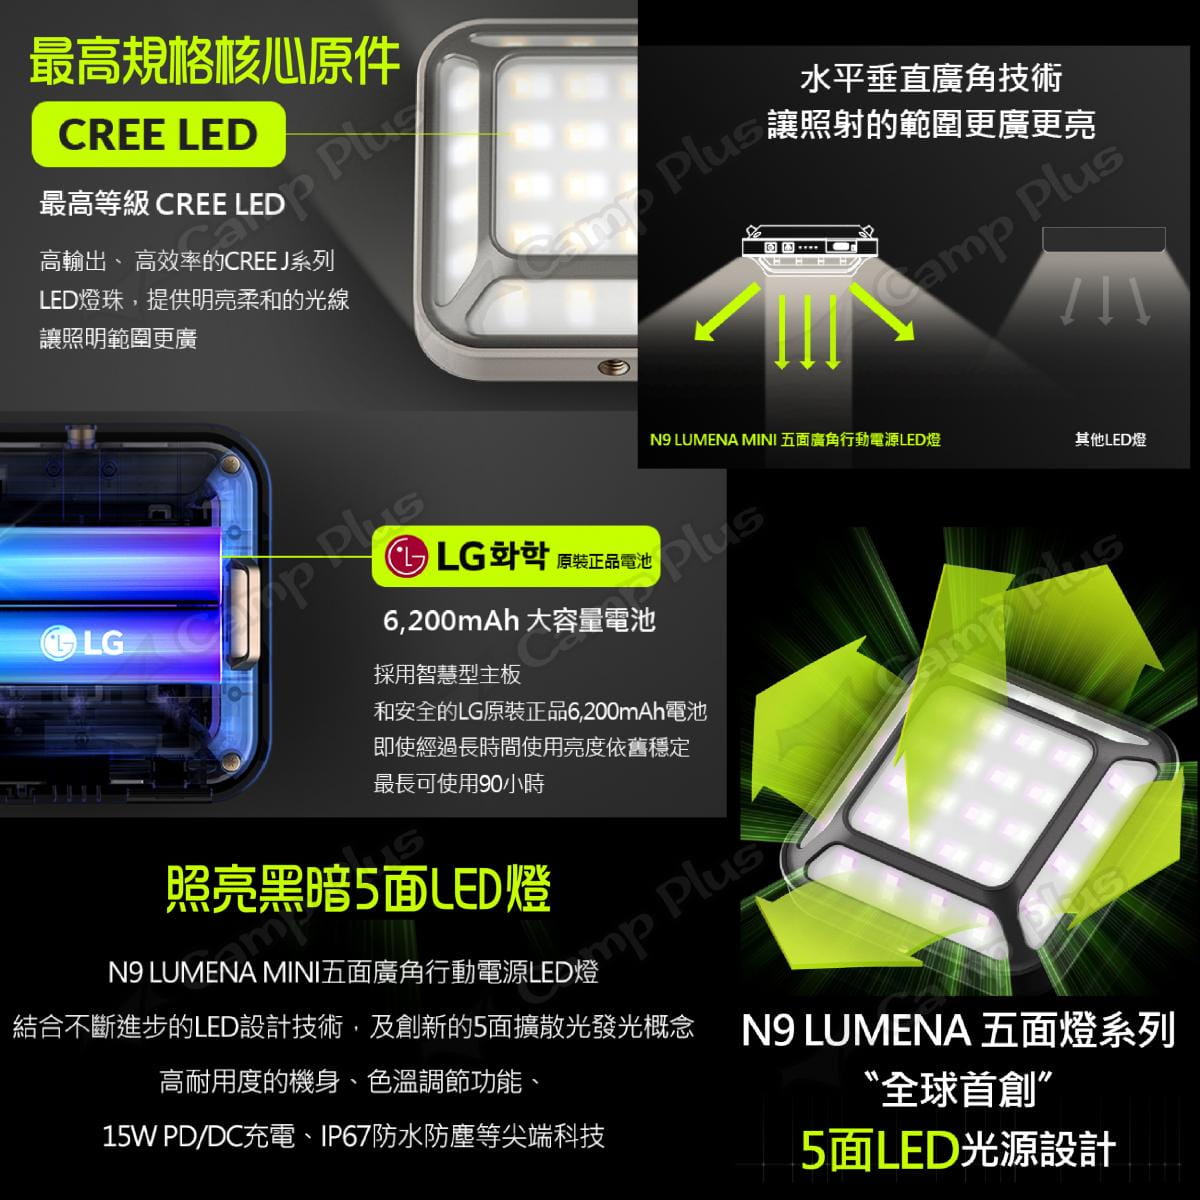 【N9 LUMENA】MINI 五面廣角行動電源LED燈 (悠遊戶外) 3